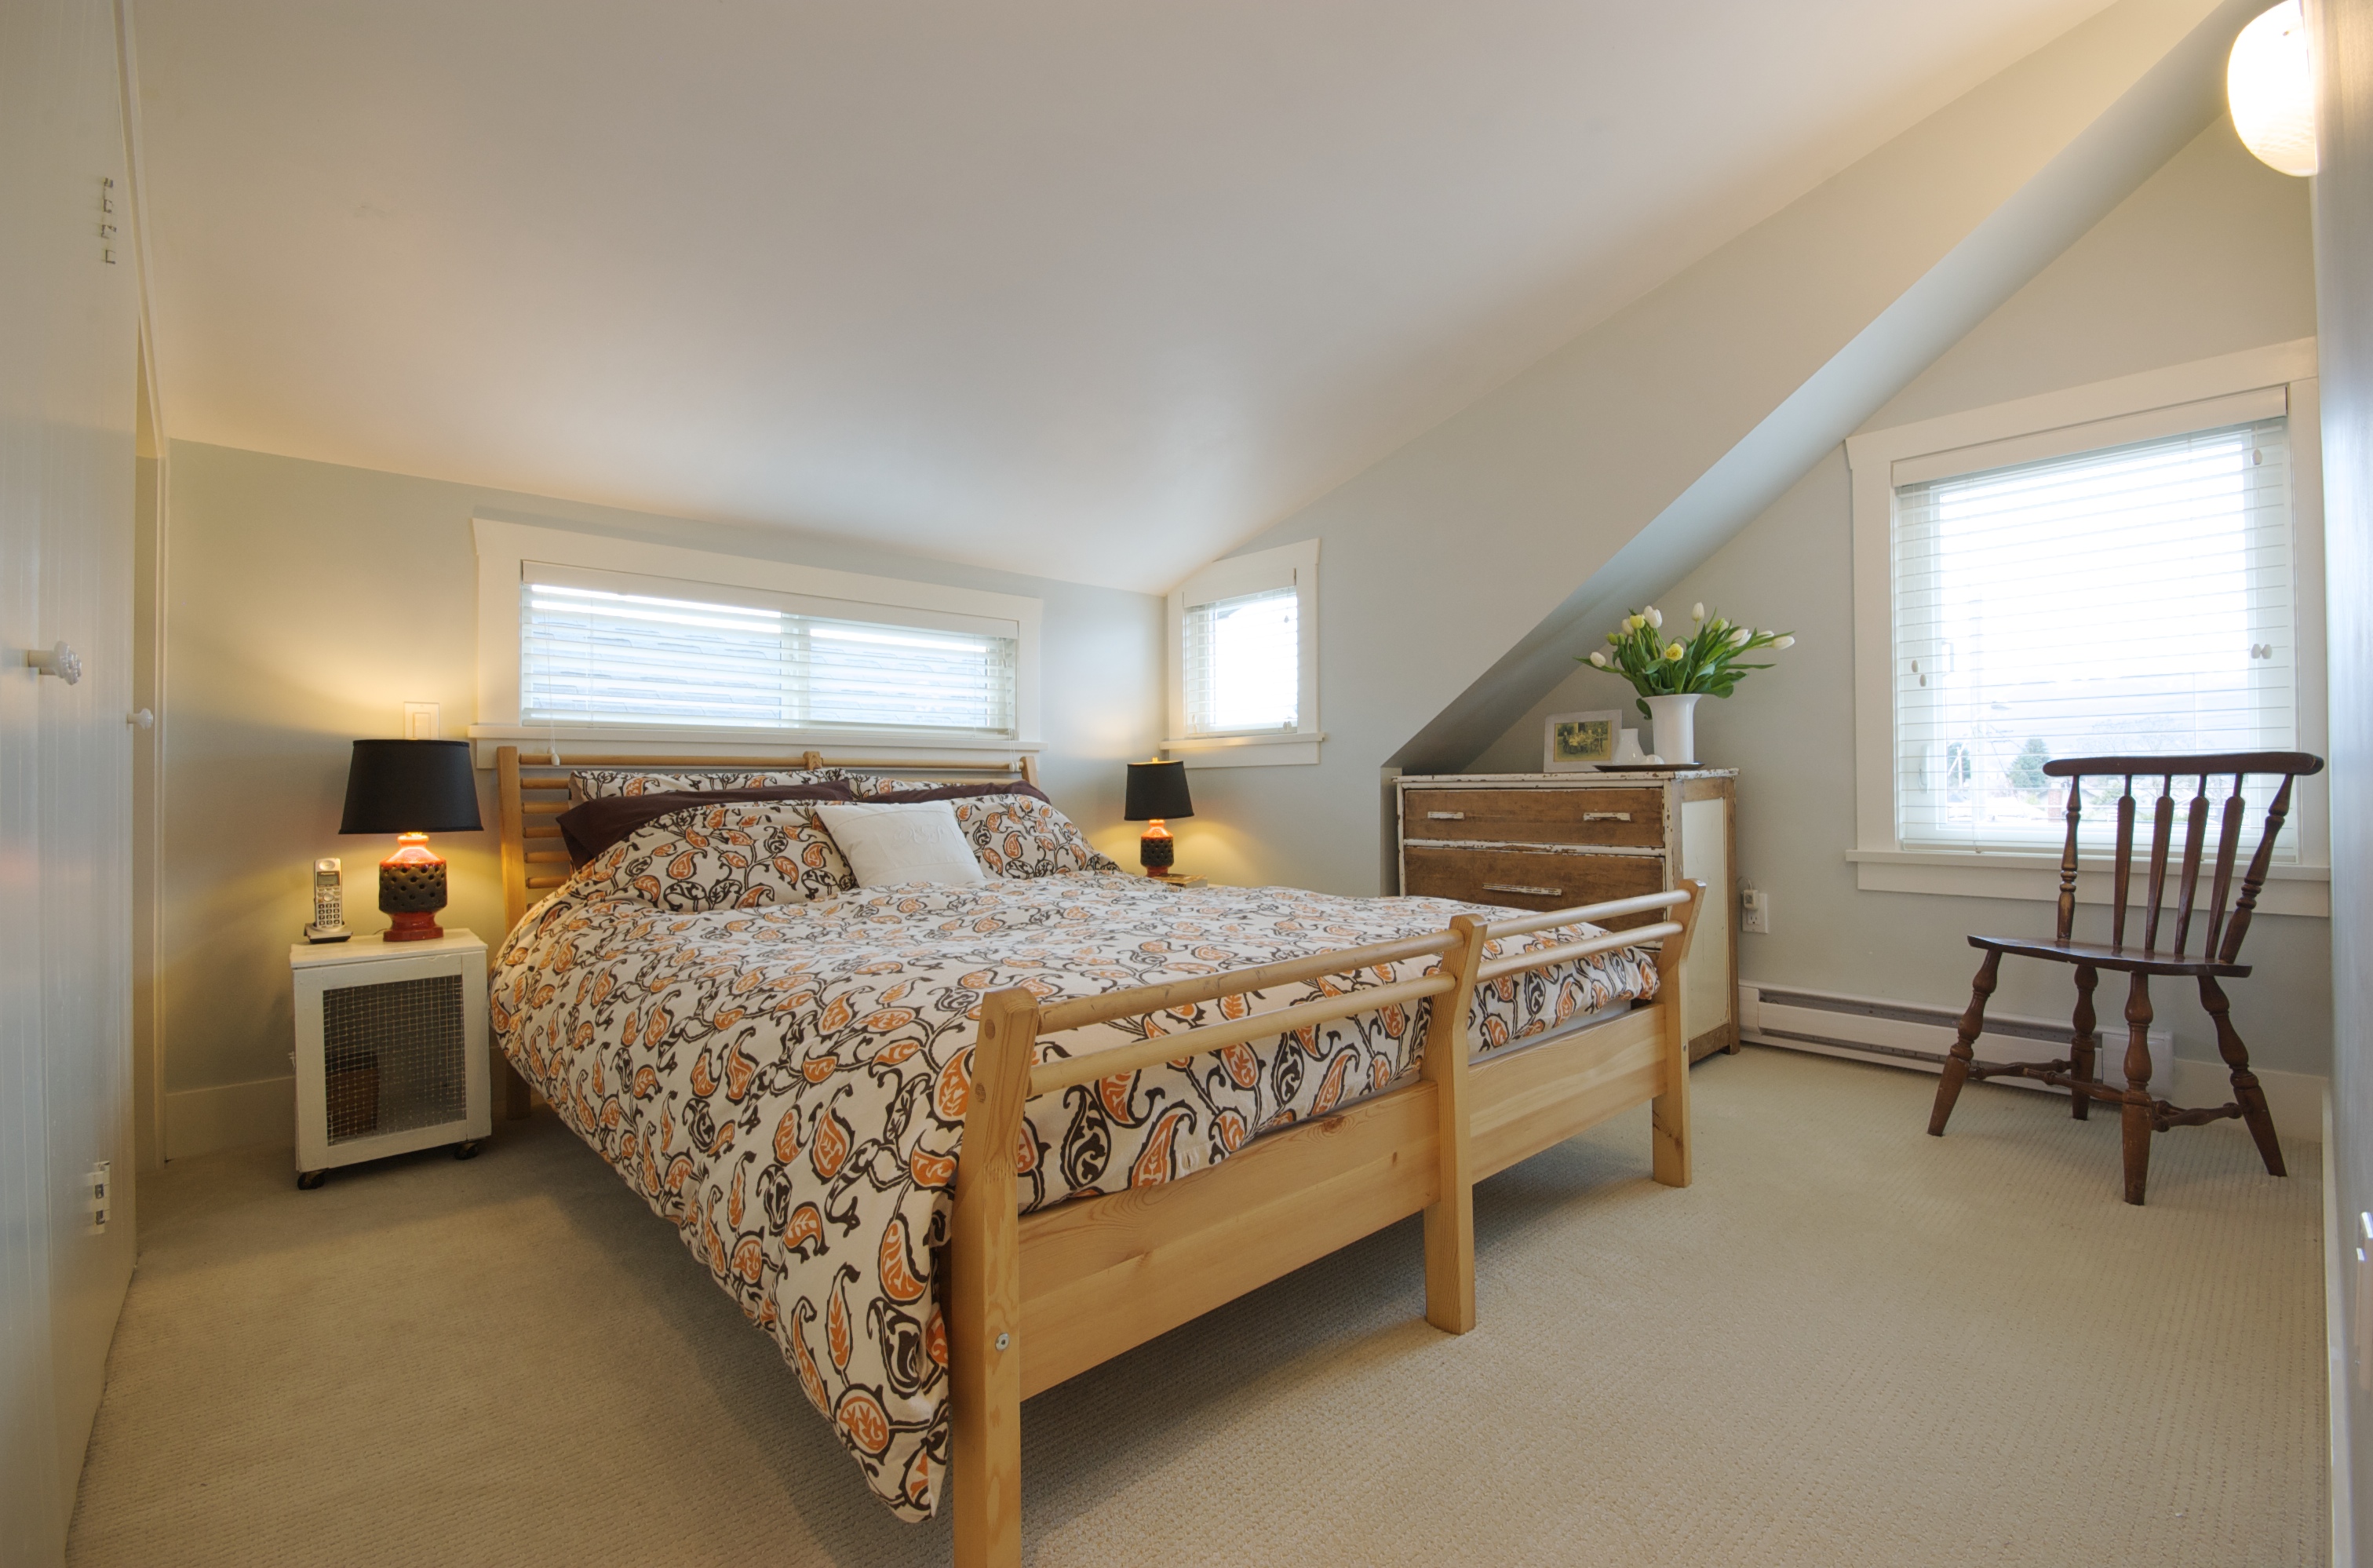 bedroom after home renovation drive - home renovations vancouver - flipside homes